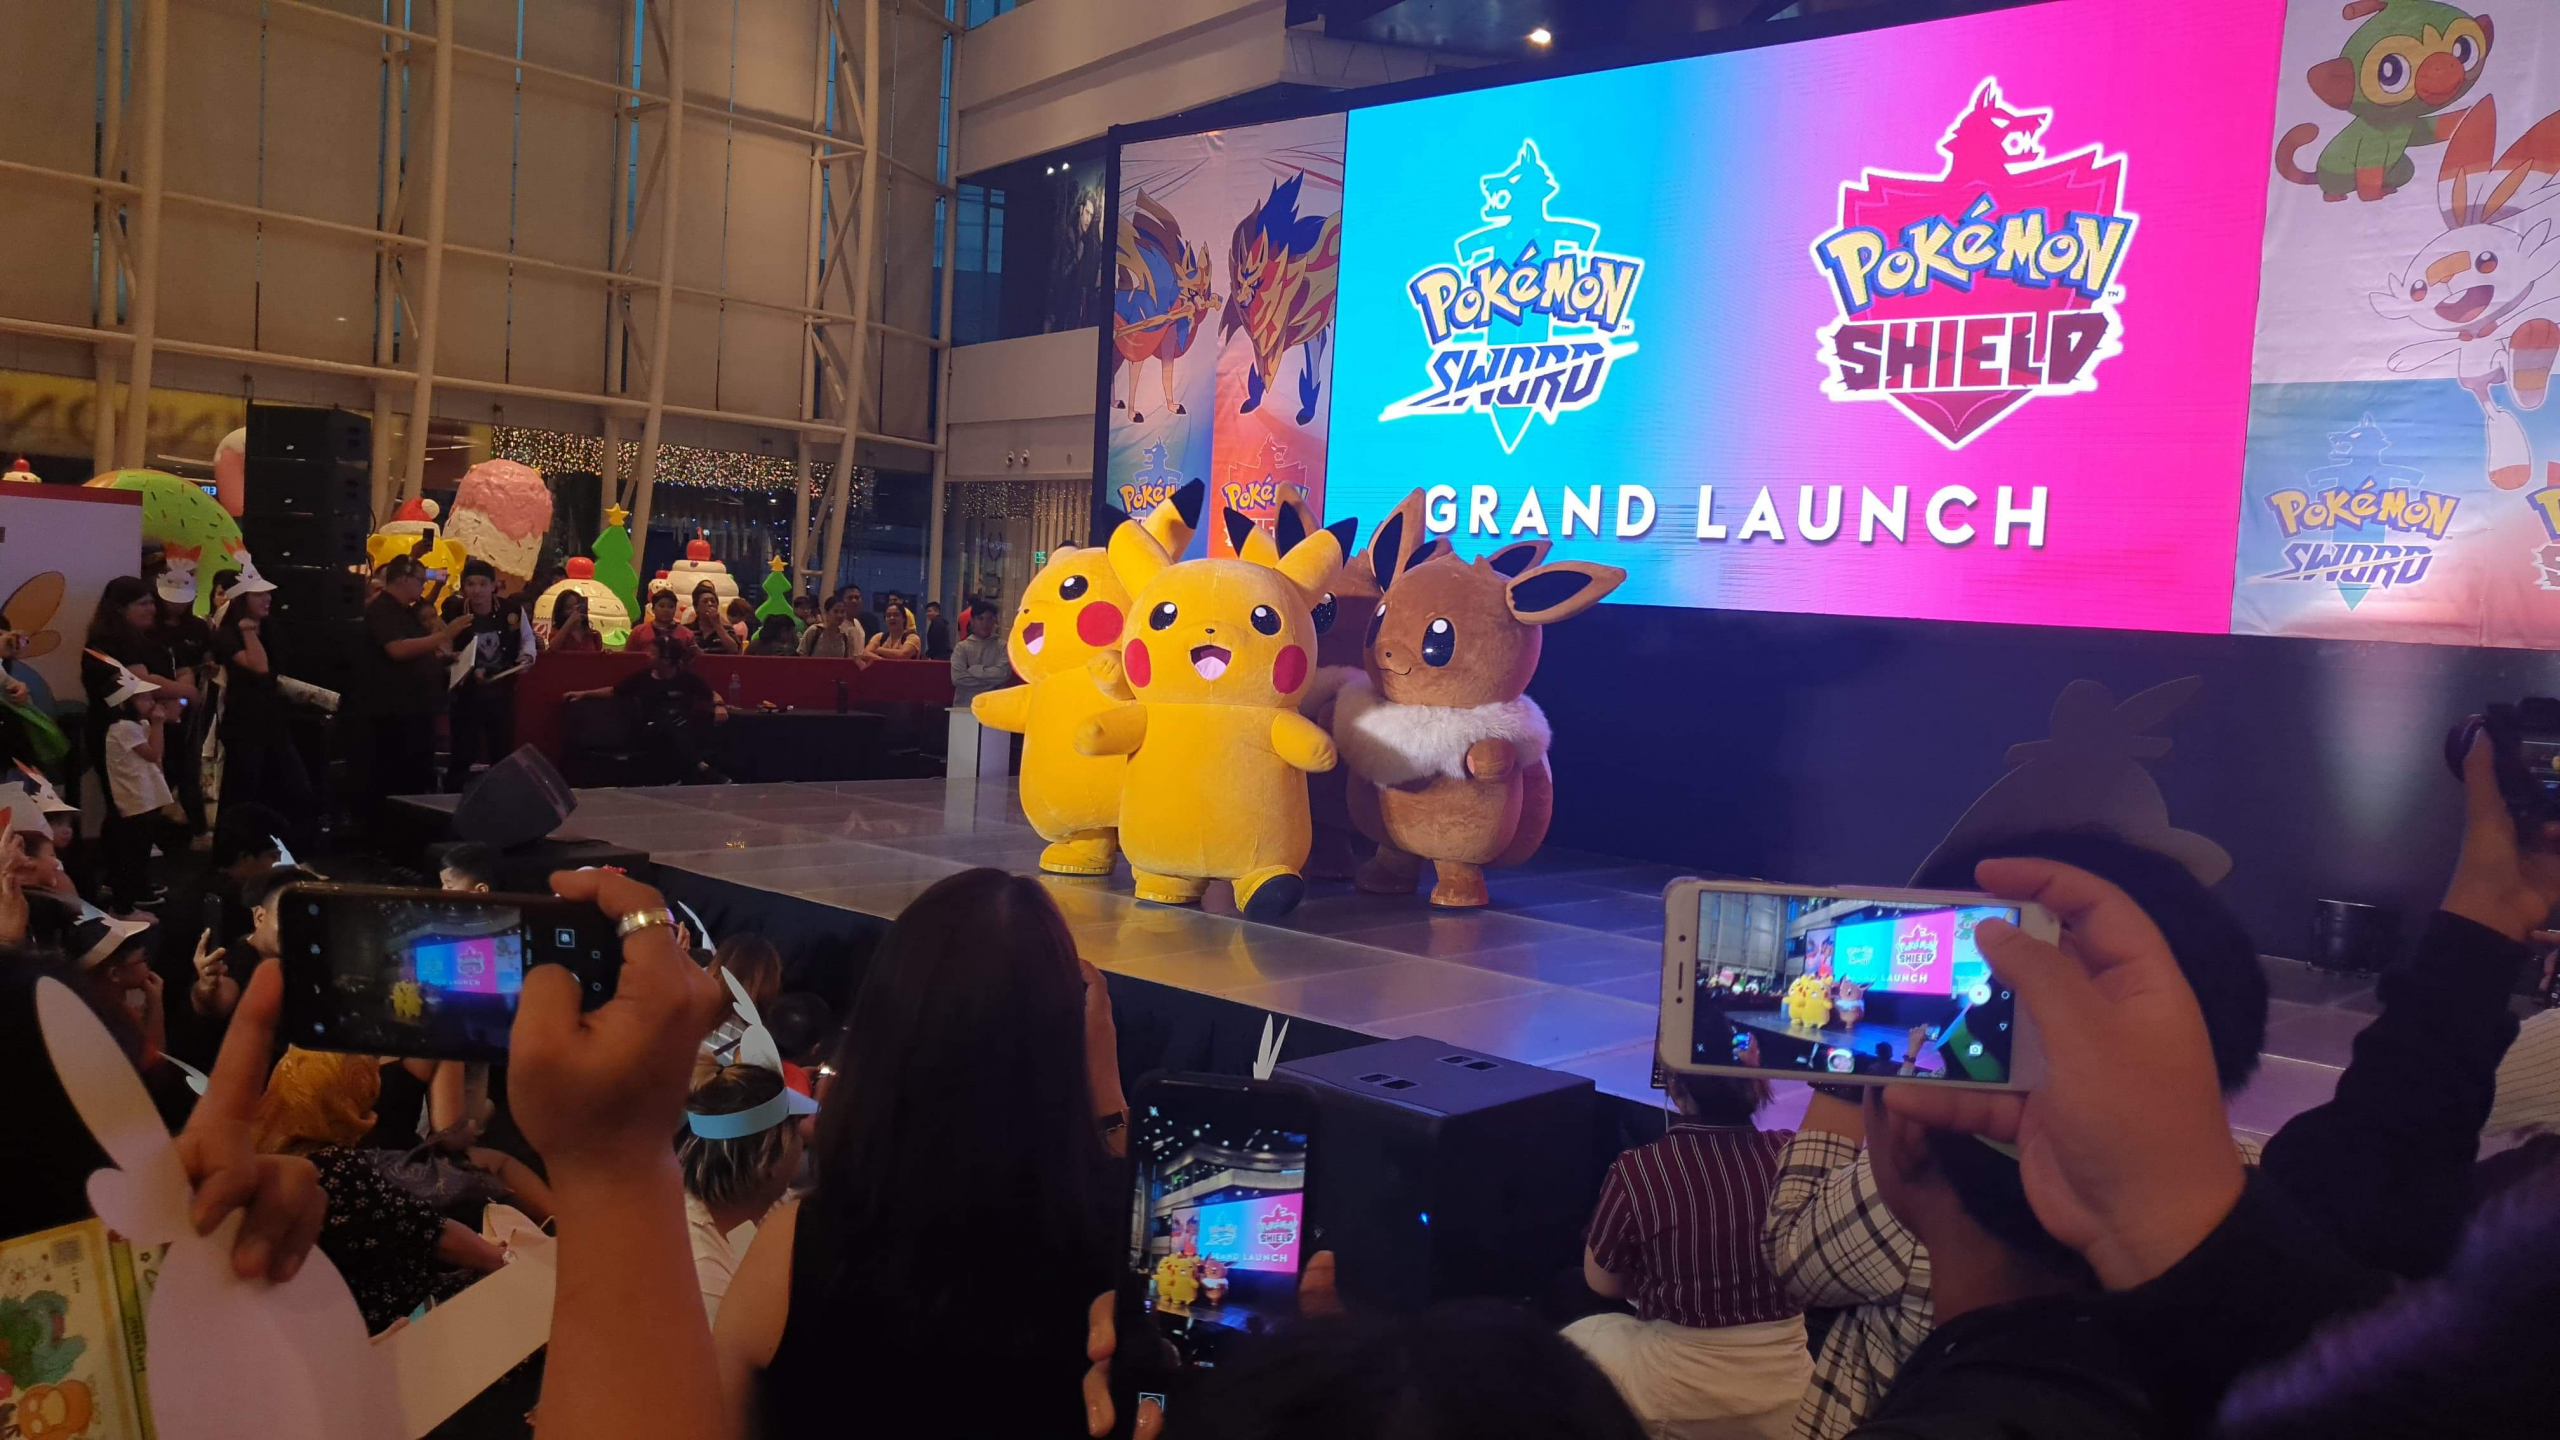 Photos of the Pokémon Sword and Pokémon Shield Launch Event at